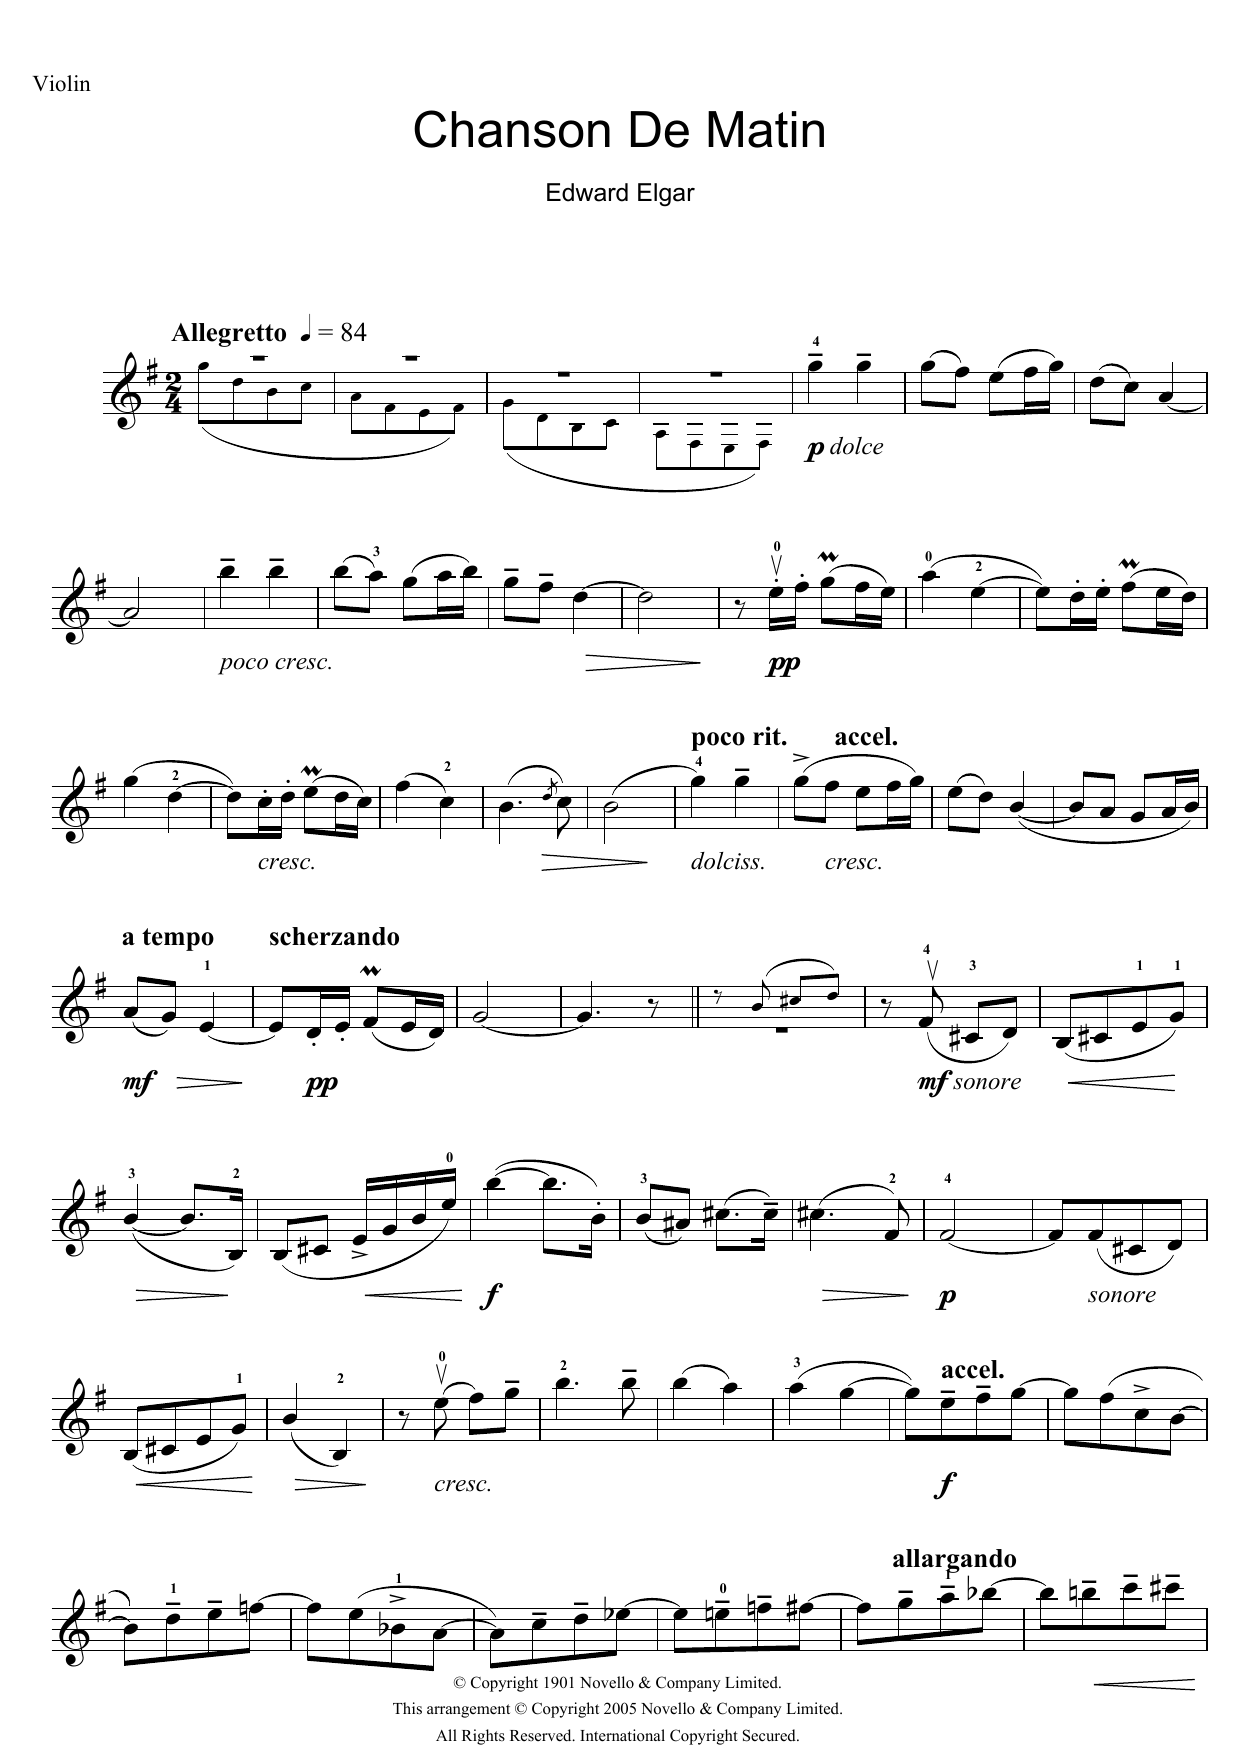 Download Edward Elgar Chanson De Matin Opus 15, No. 2 Sheet Music